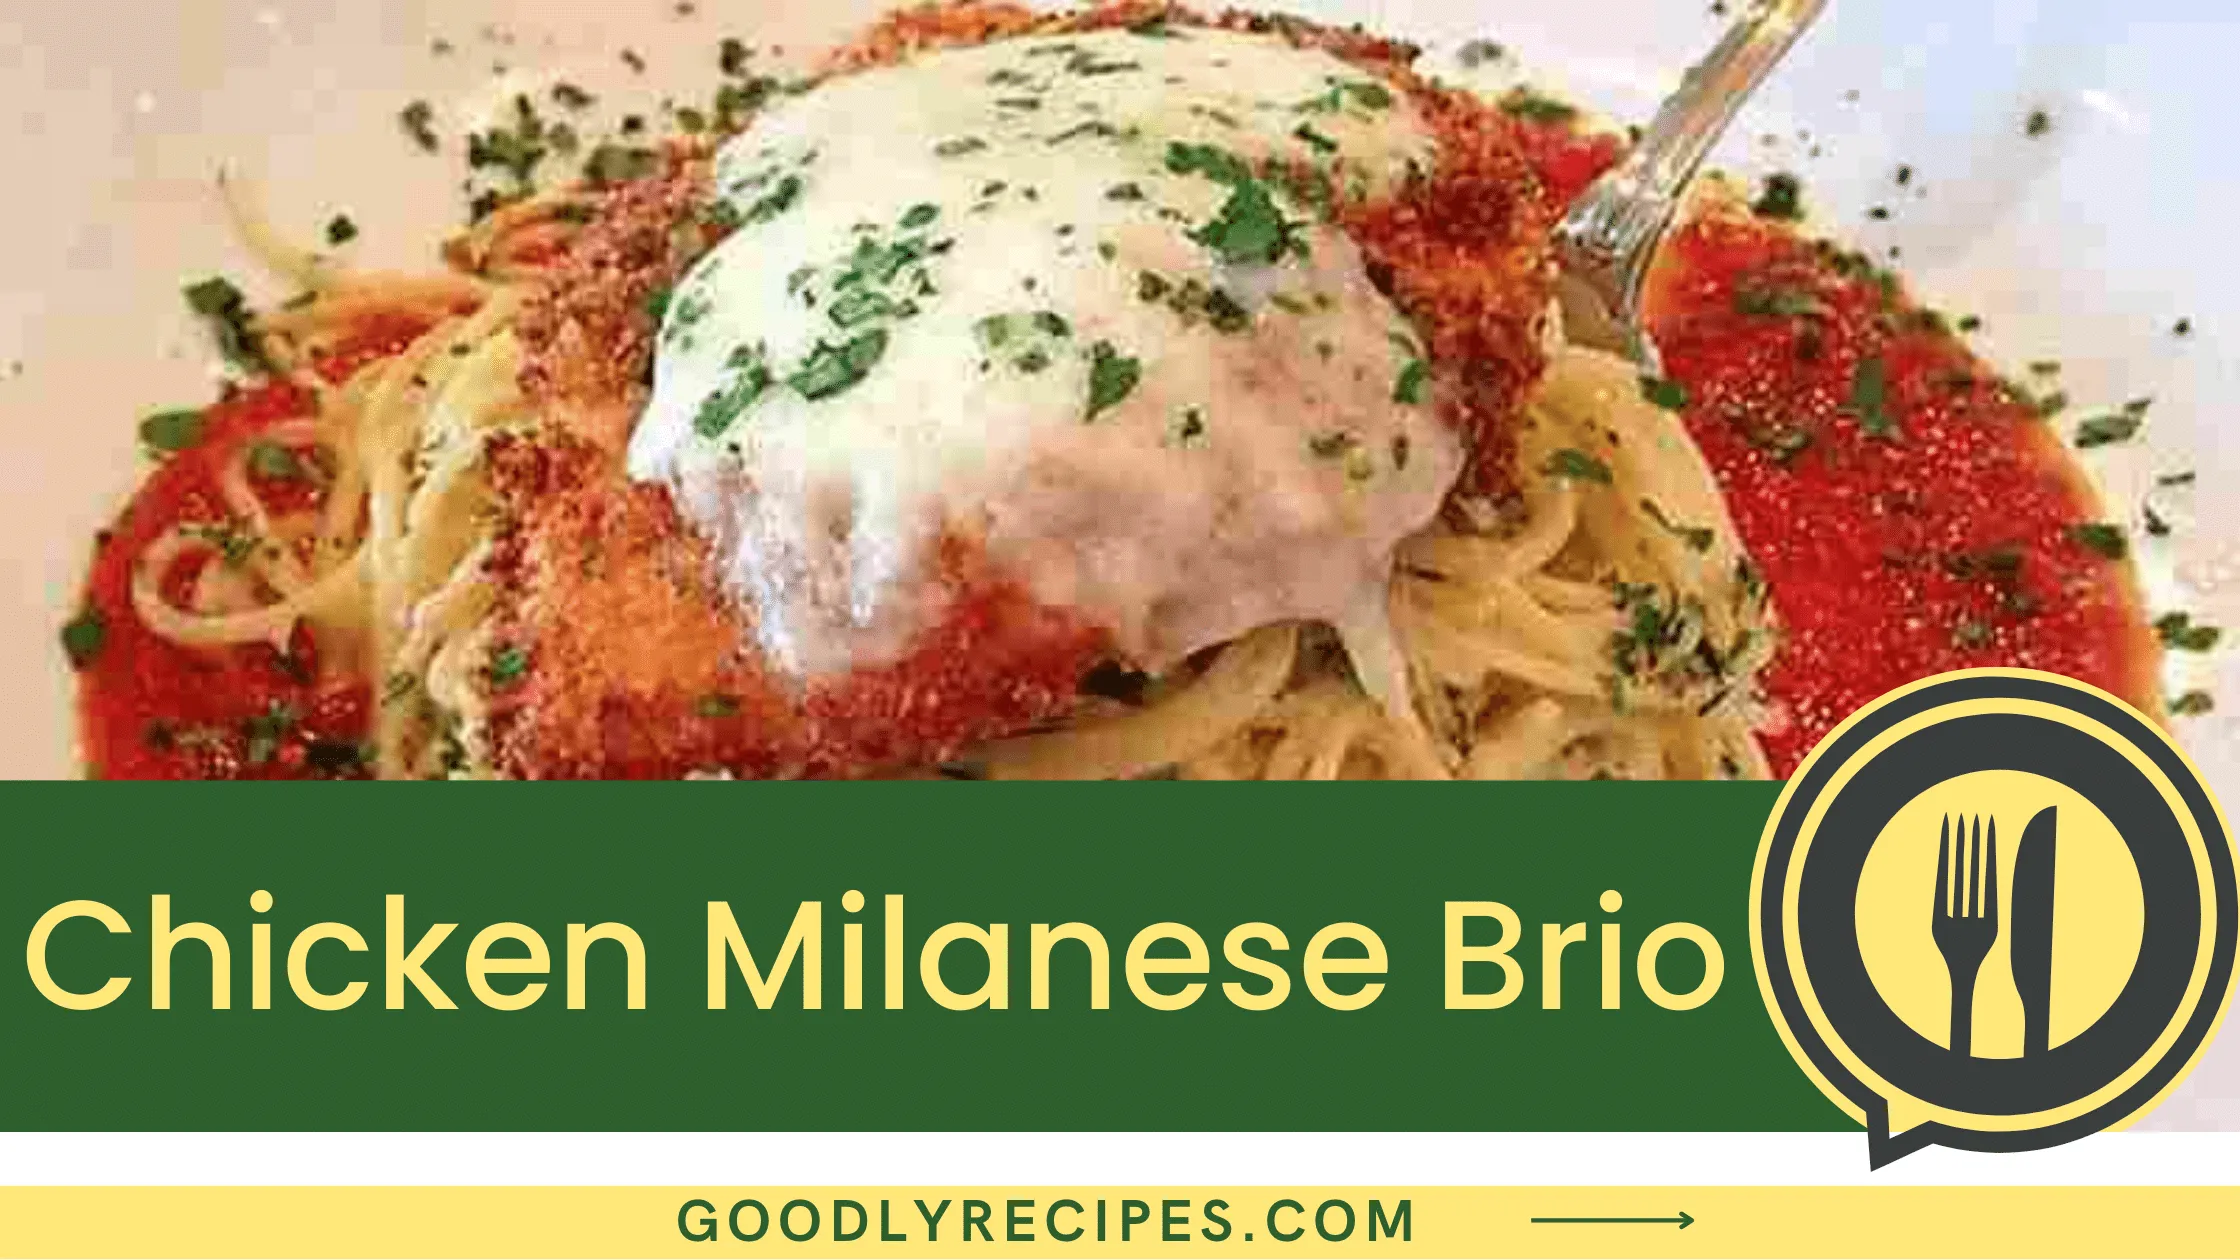 What Is Chicken Milanese Brio?